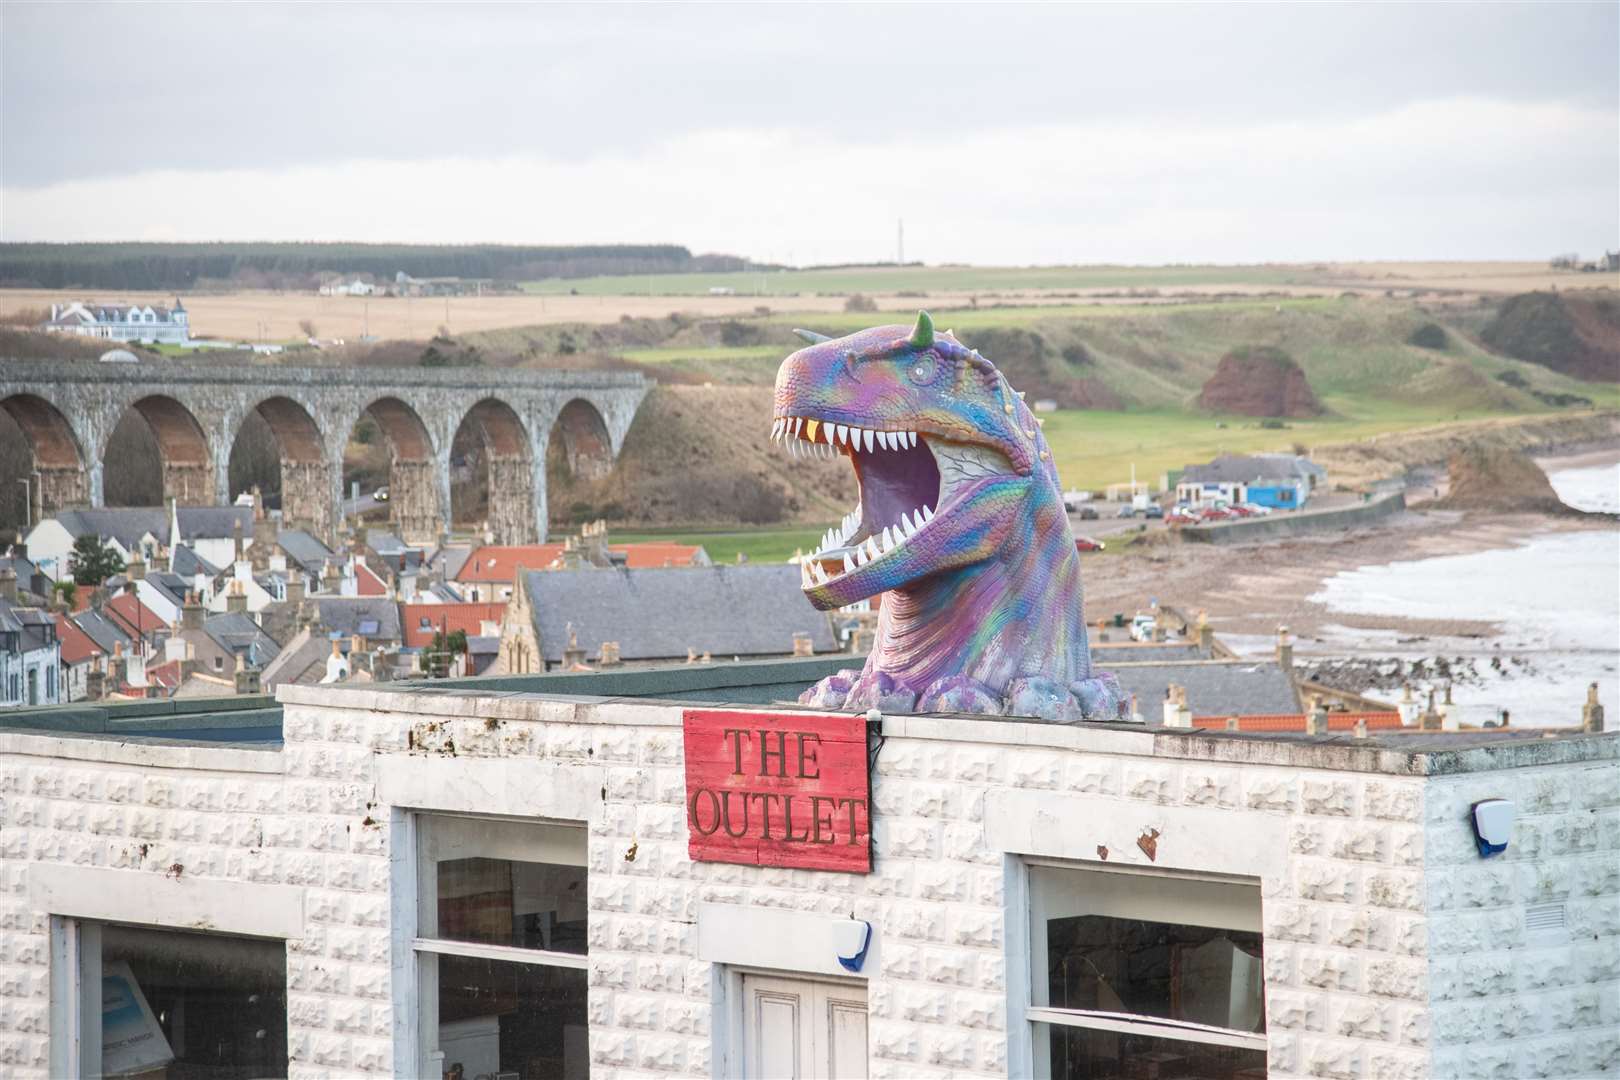 The Cullen dinosaur. A bit of fun or a real eyesore? Photo: Daniel Forsyth.